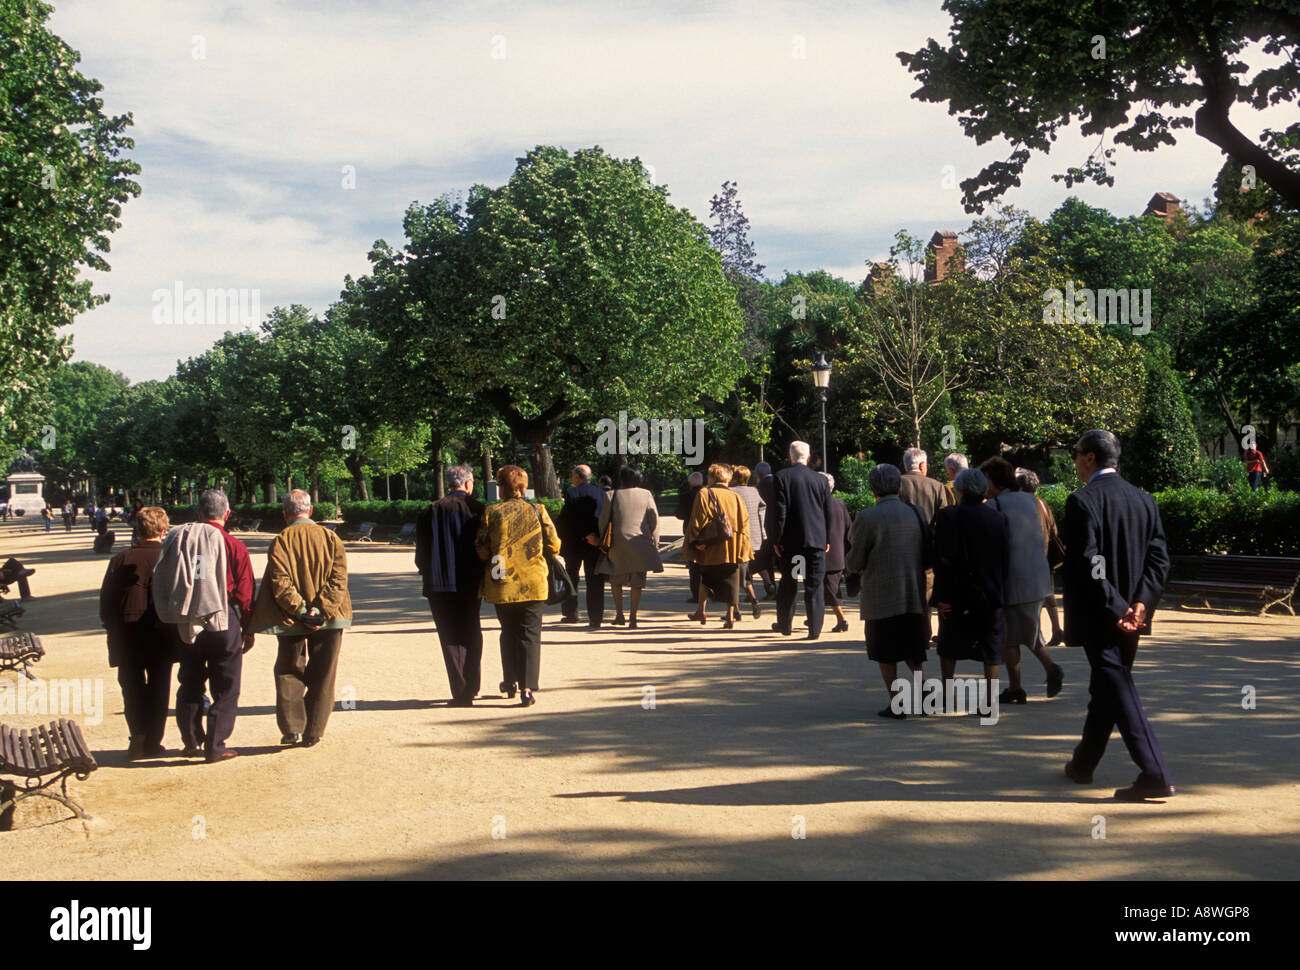 Spaniards, Spanish, mature, senior citizens, men, women, walking in park, Ciutadella Park, Parc de la Ciutadella, Barcelona, Barcelona Province, Spain Stock Photo